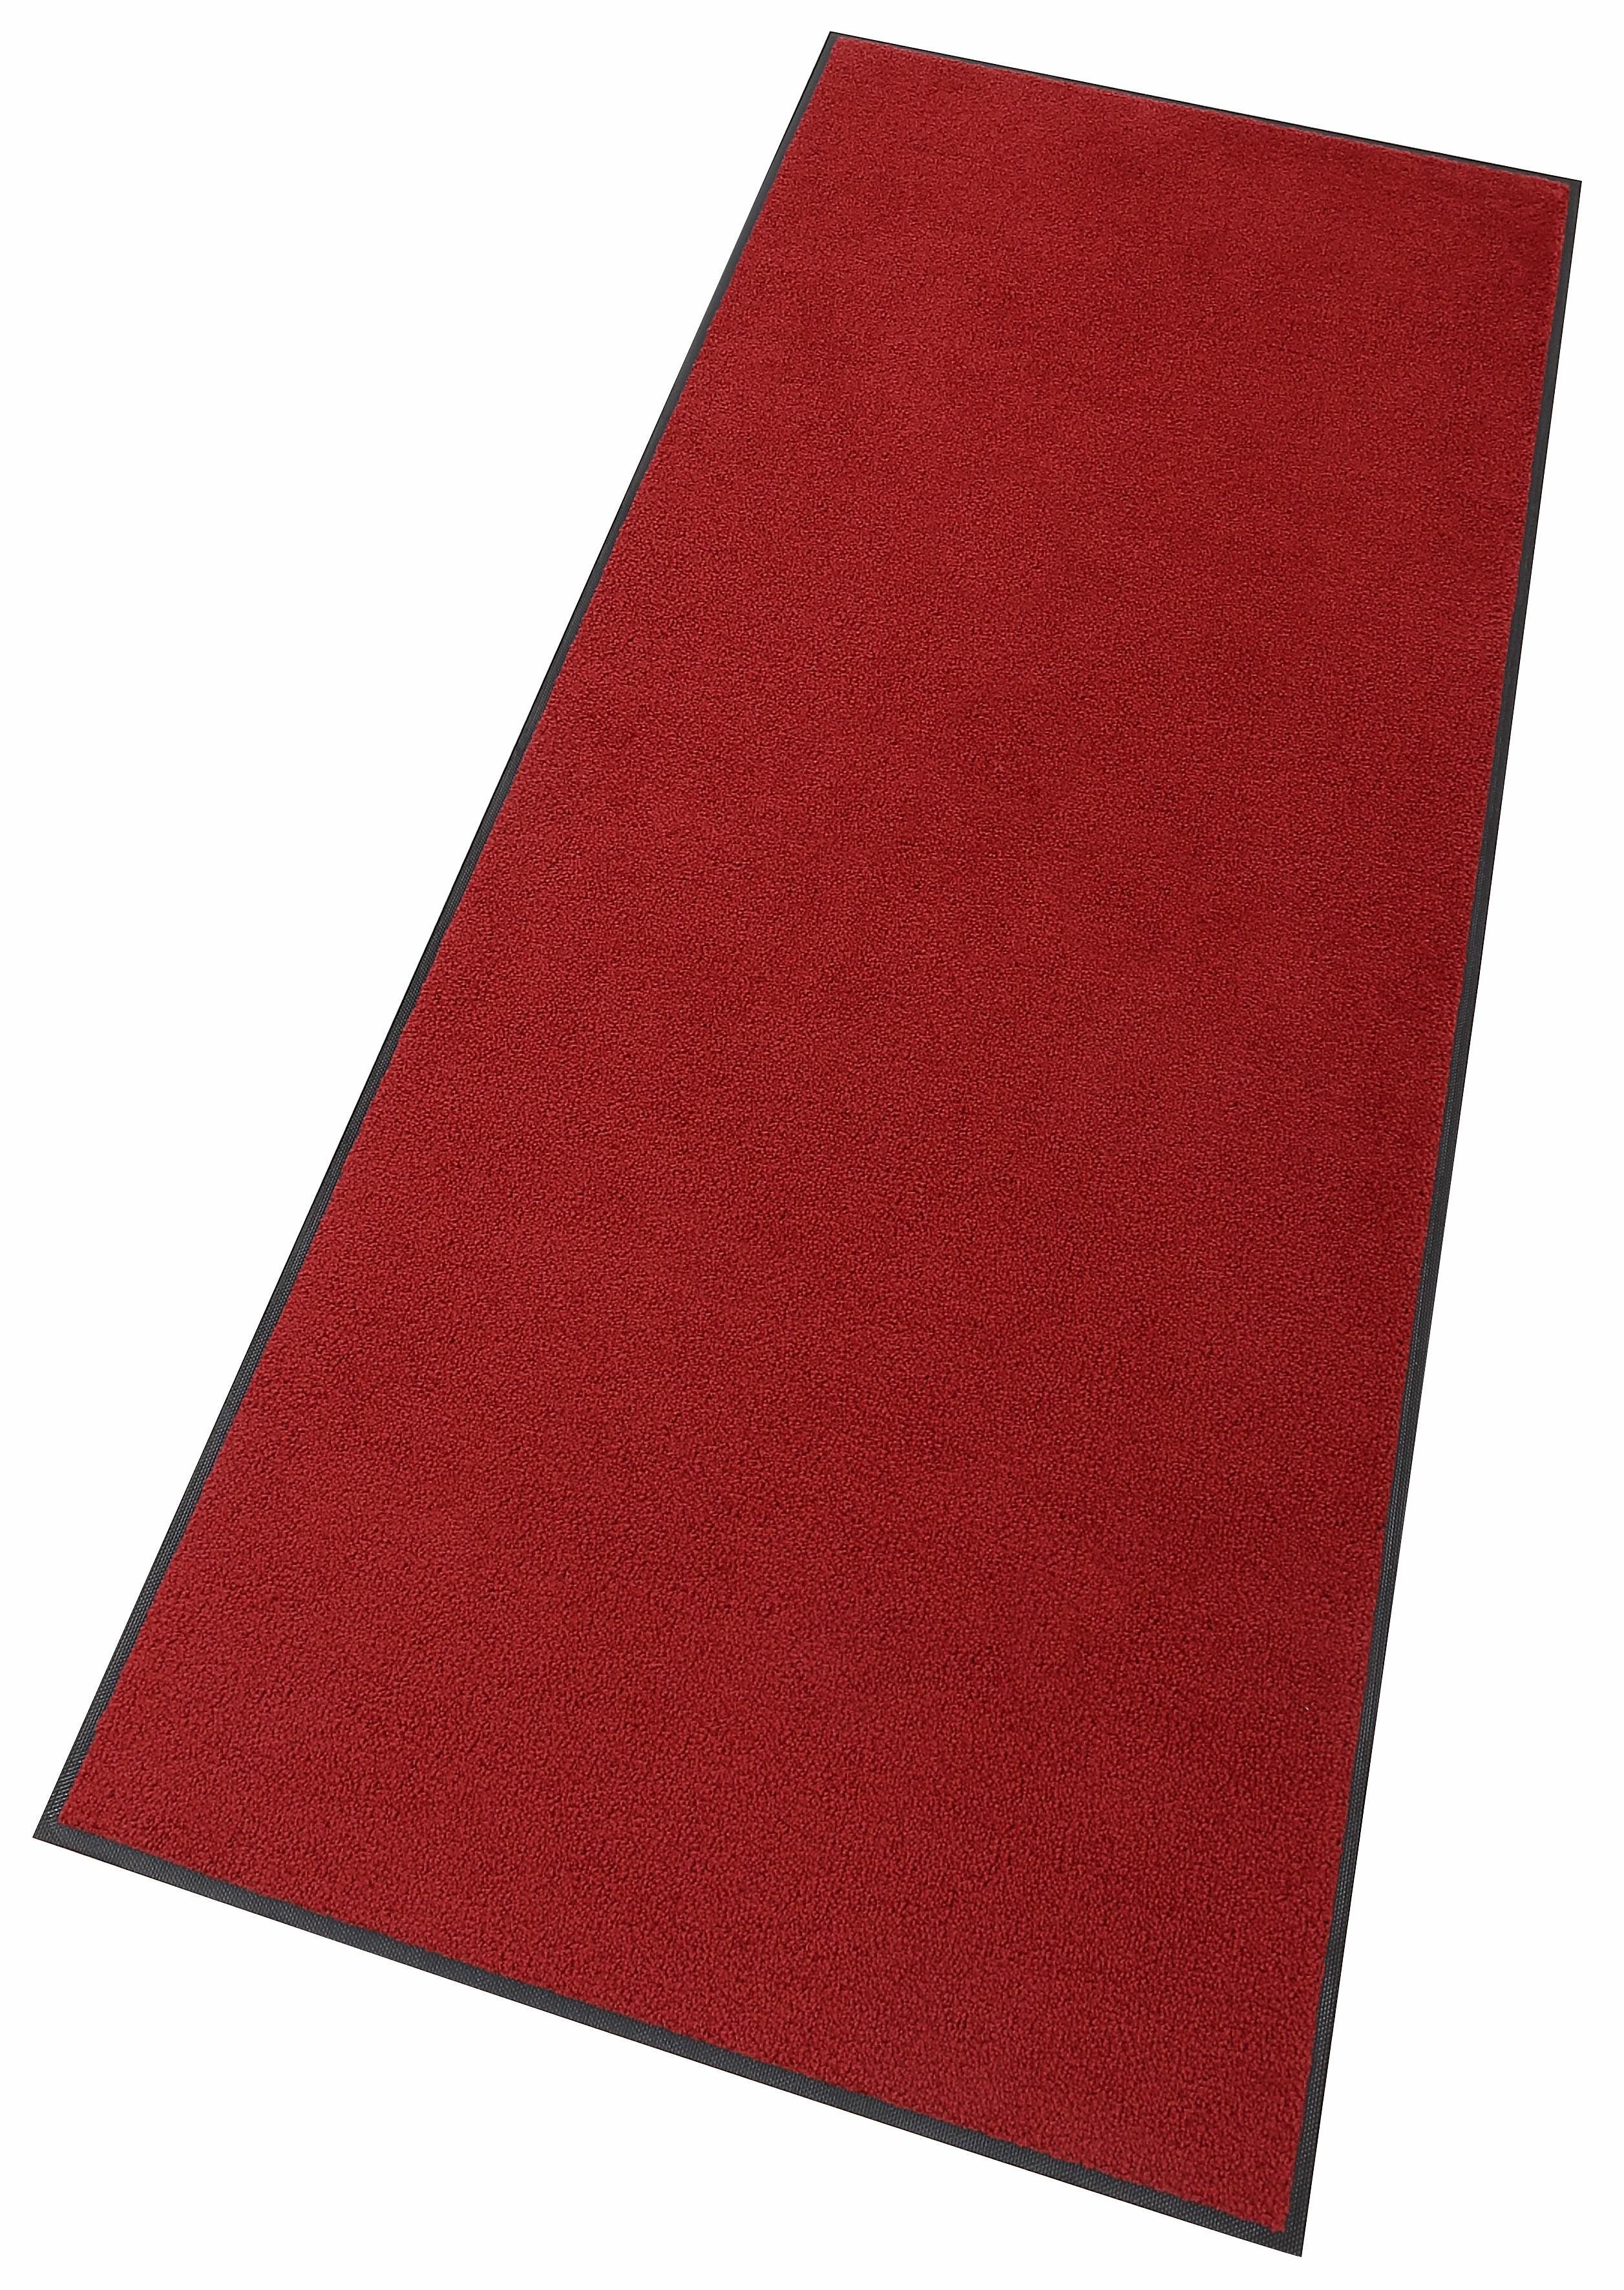 Läufer Original Uni, 9 Höhe: Schmutzfangteppich, Schmutzmatte, Kleen-Tex, Schmutzfangläufer, mm, rechteckig, rot rutschhemmend by wash+dry